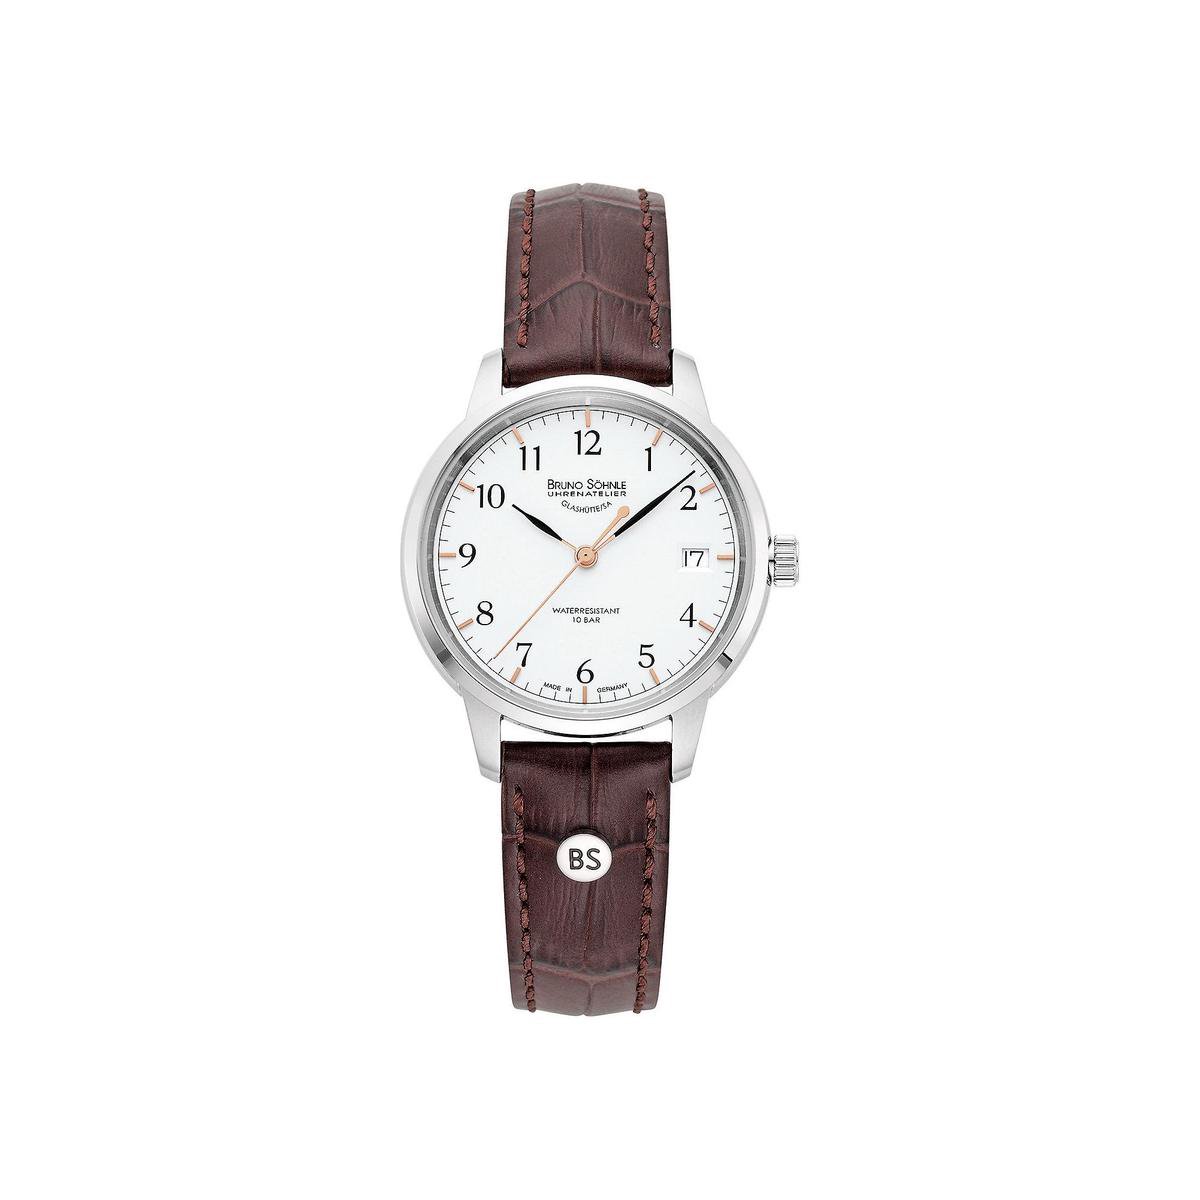 Bruno Soehnle dames horloges quartz analoog One Size 87452042